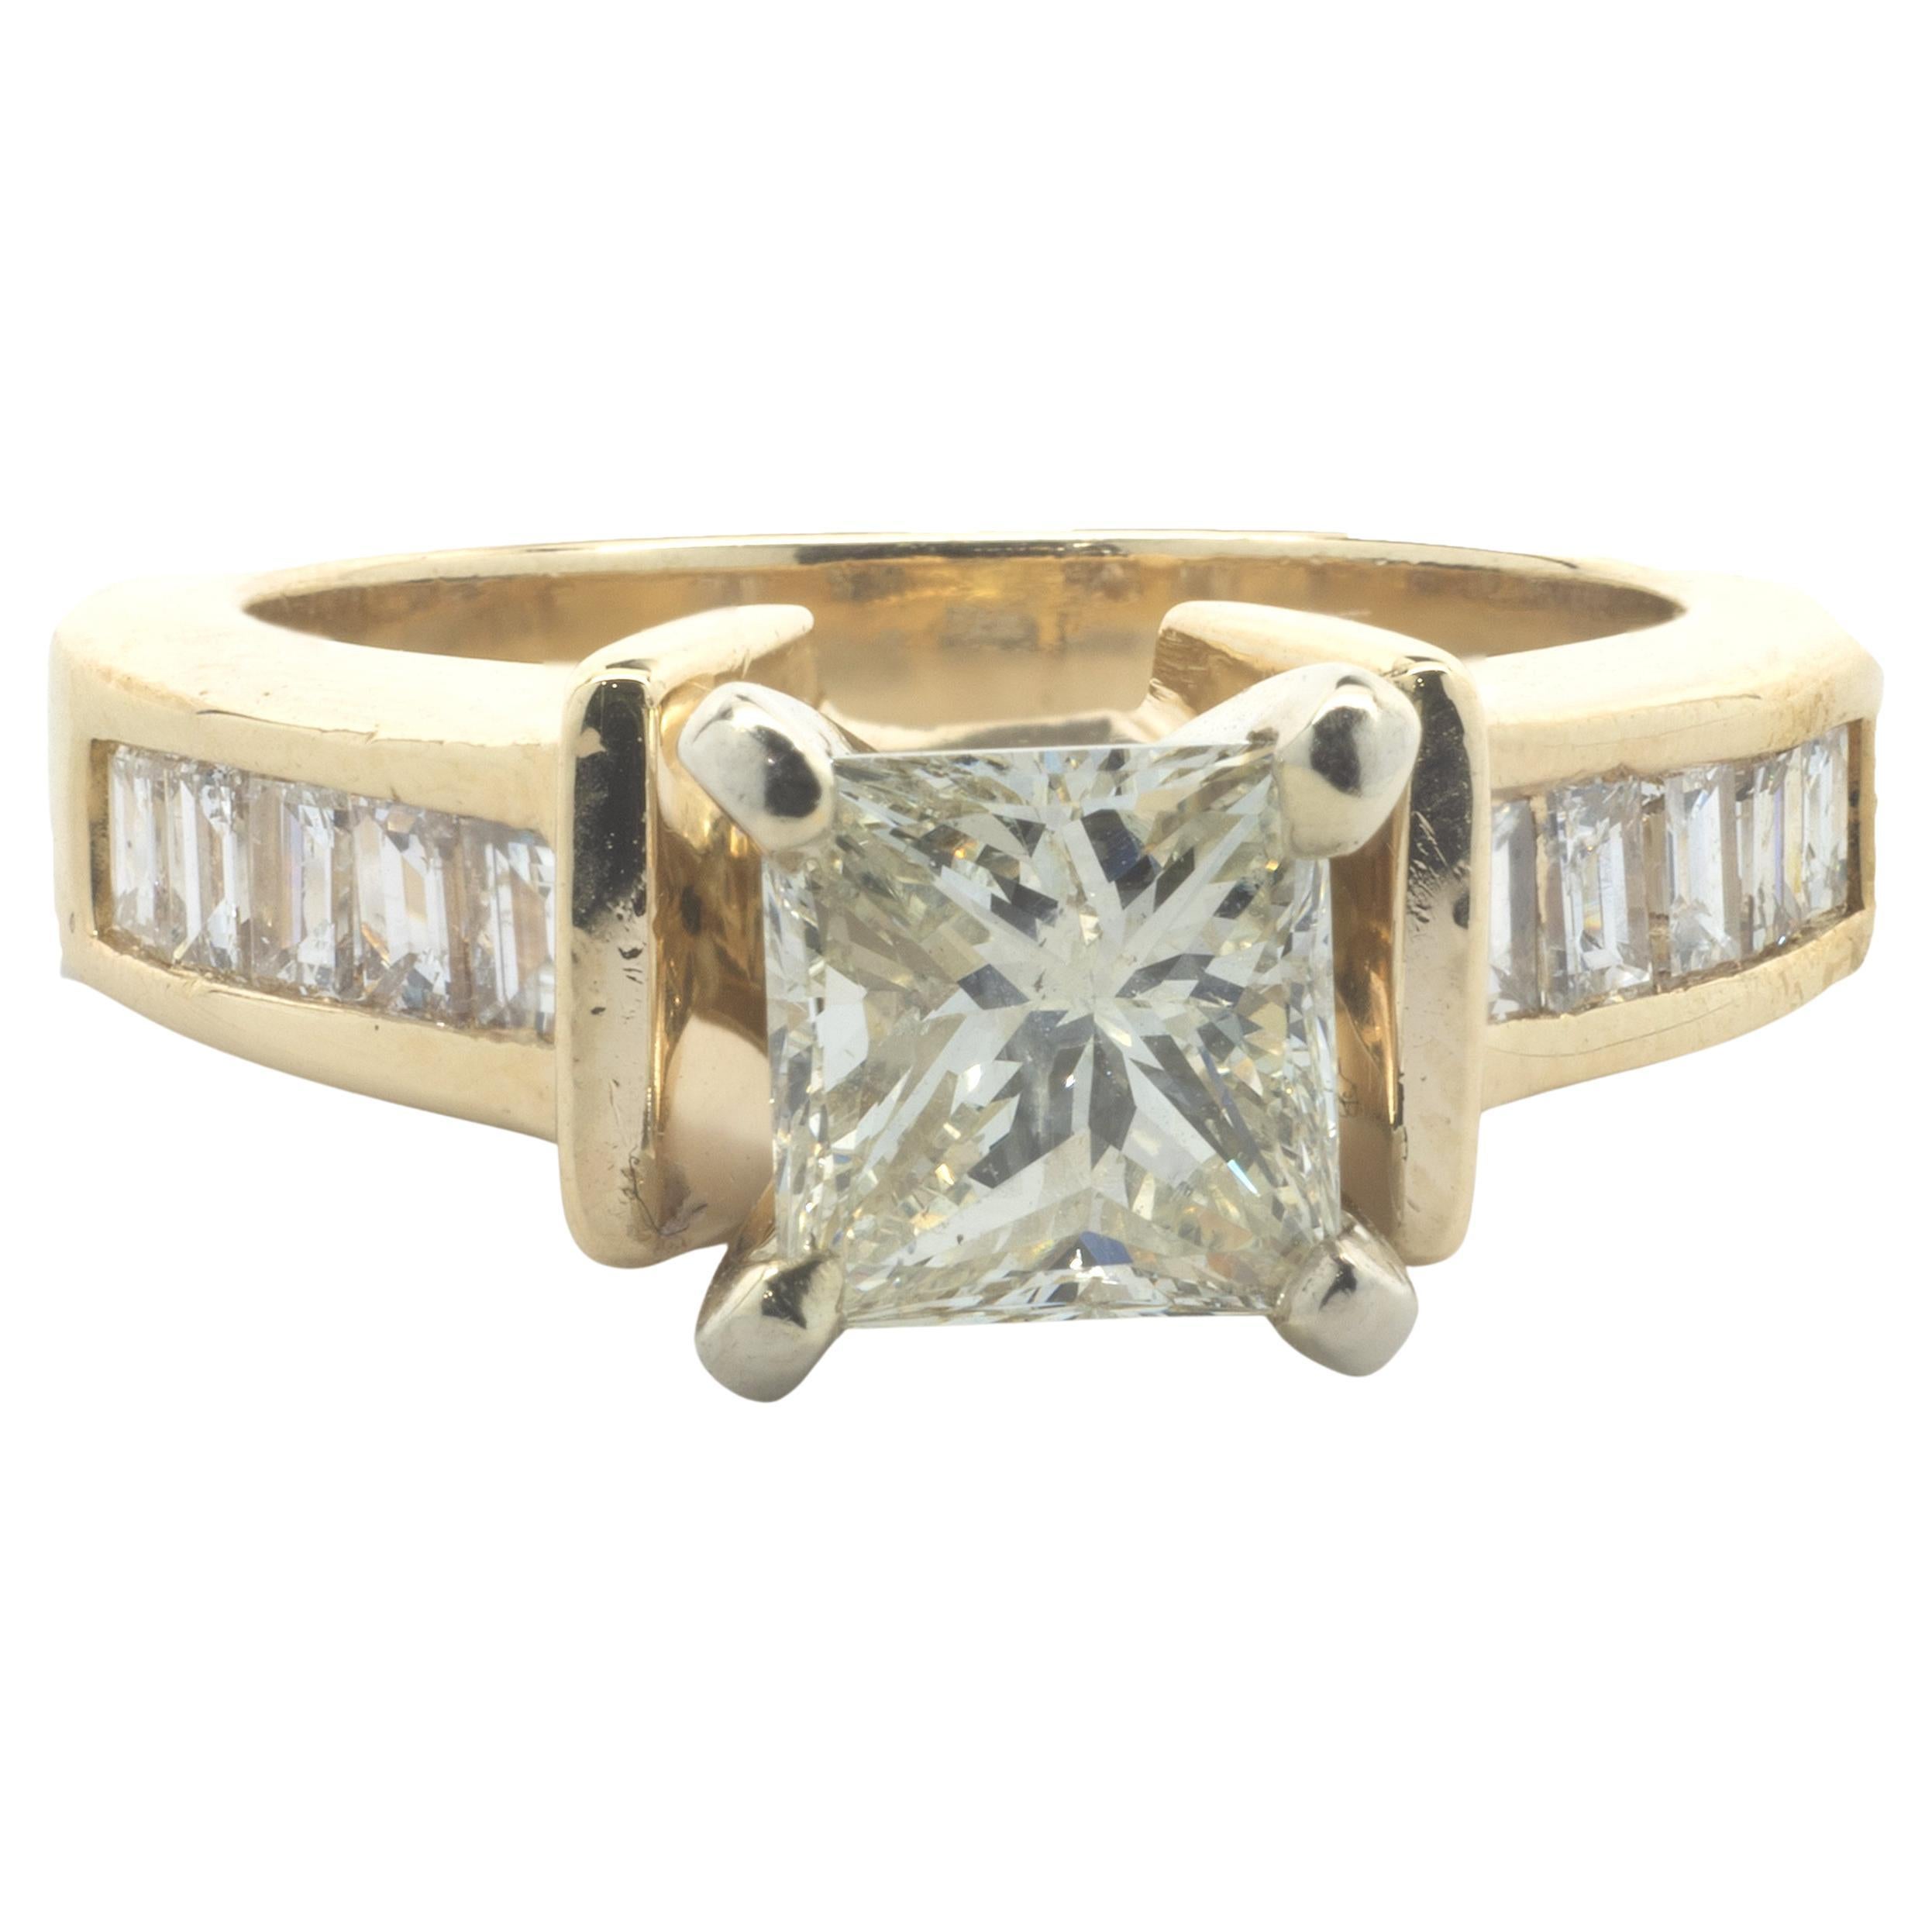 14 Karat Yellow Gold Princess Cut Diamond Engagement Ring